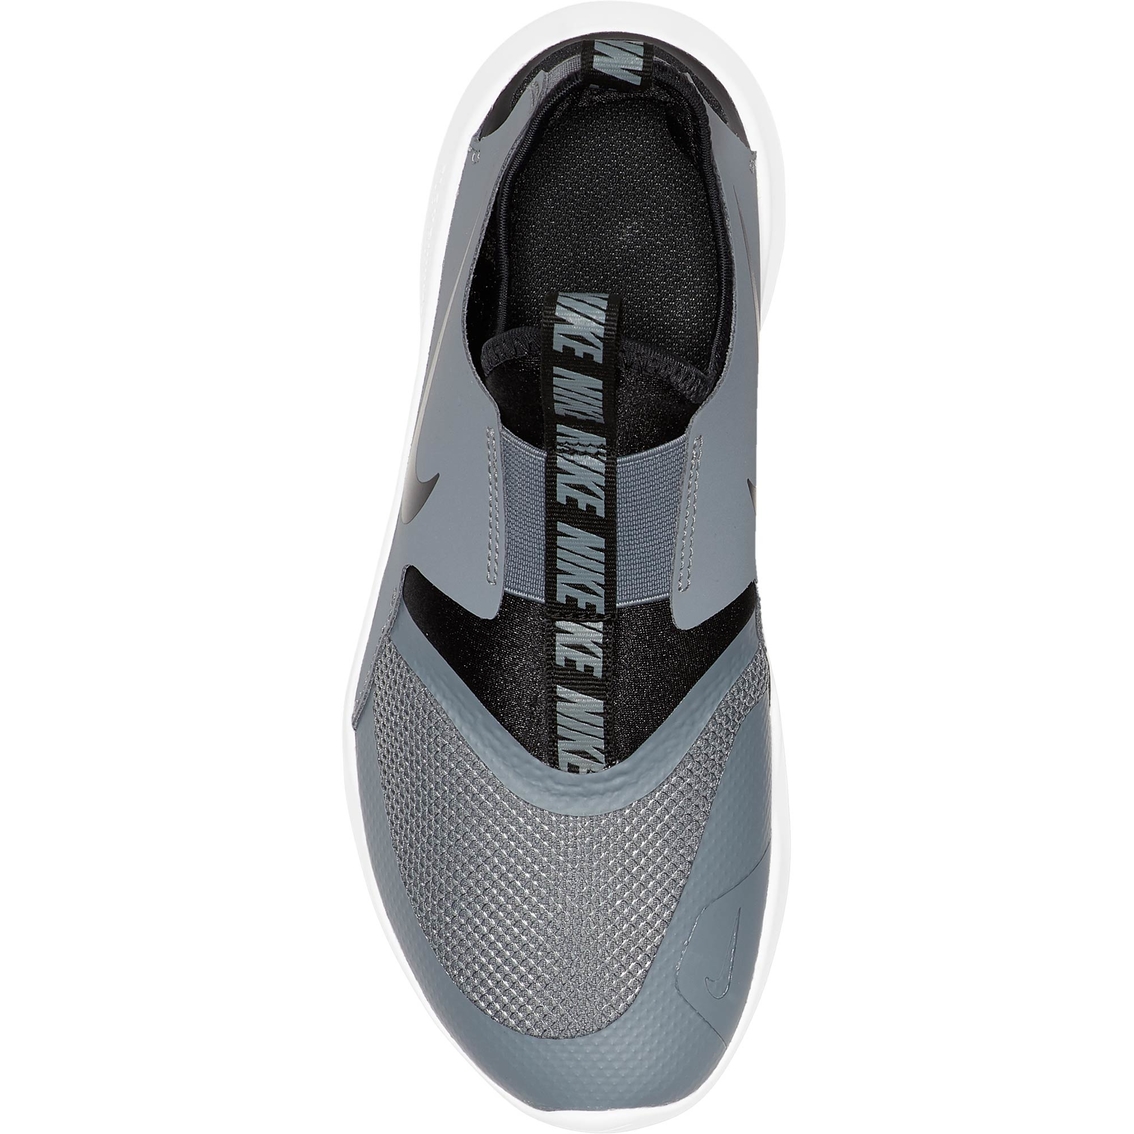 Nike Grade School Boys Flex Runner Shoes - Image 4 of 6